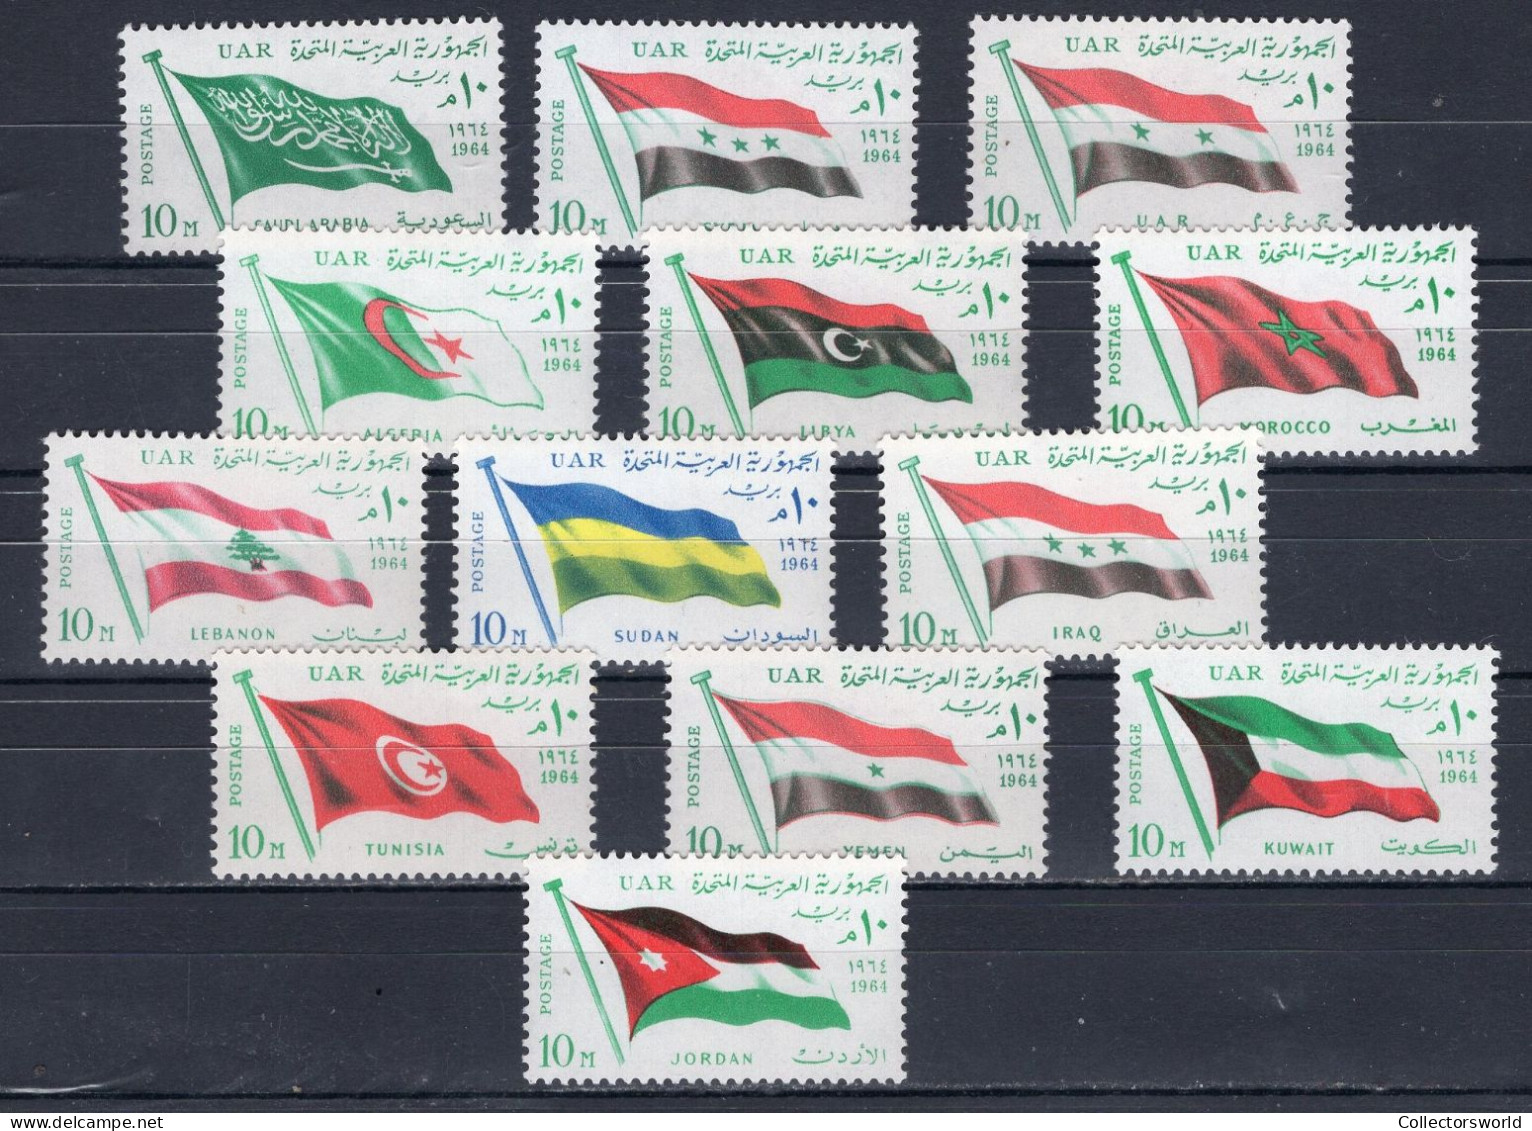 UAR United Arab Emirates Egypt 1964 Serie 13v Flags Arab League Summit MNH - Ver. Arab. Emirate